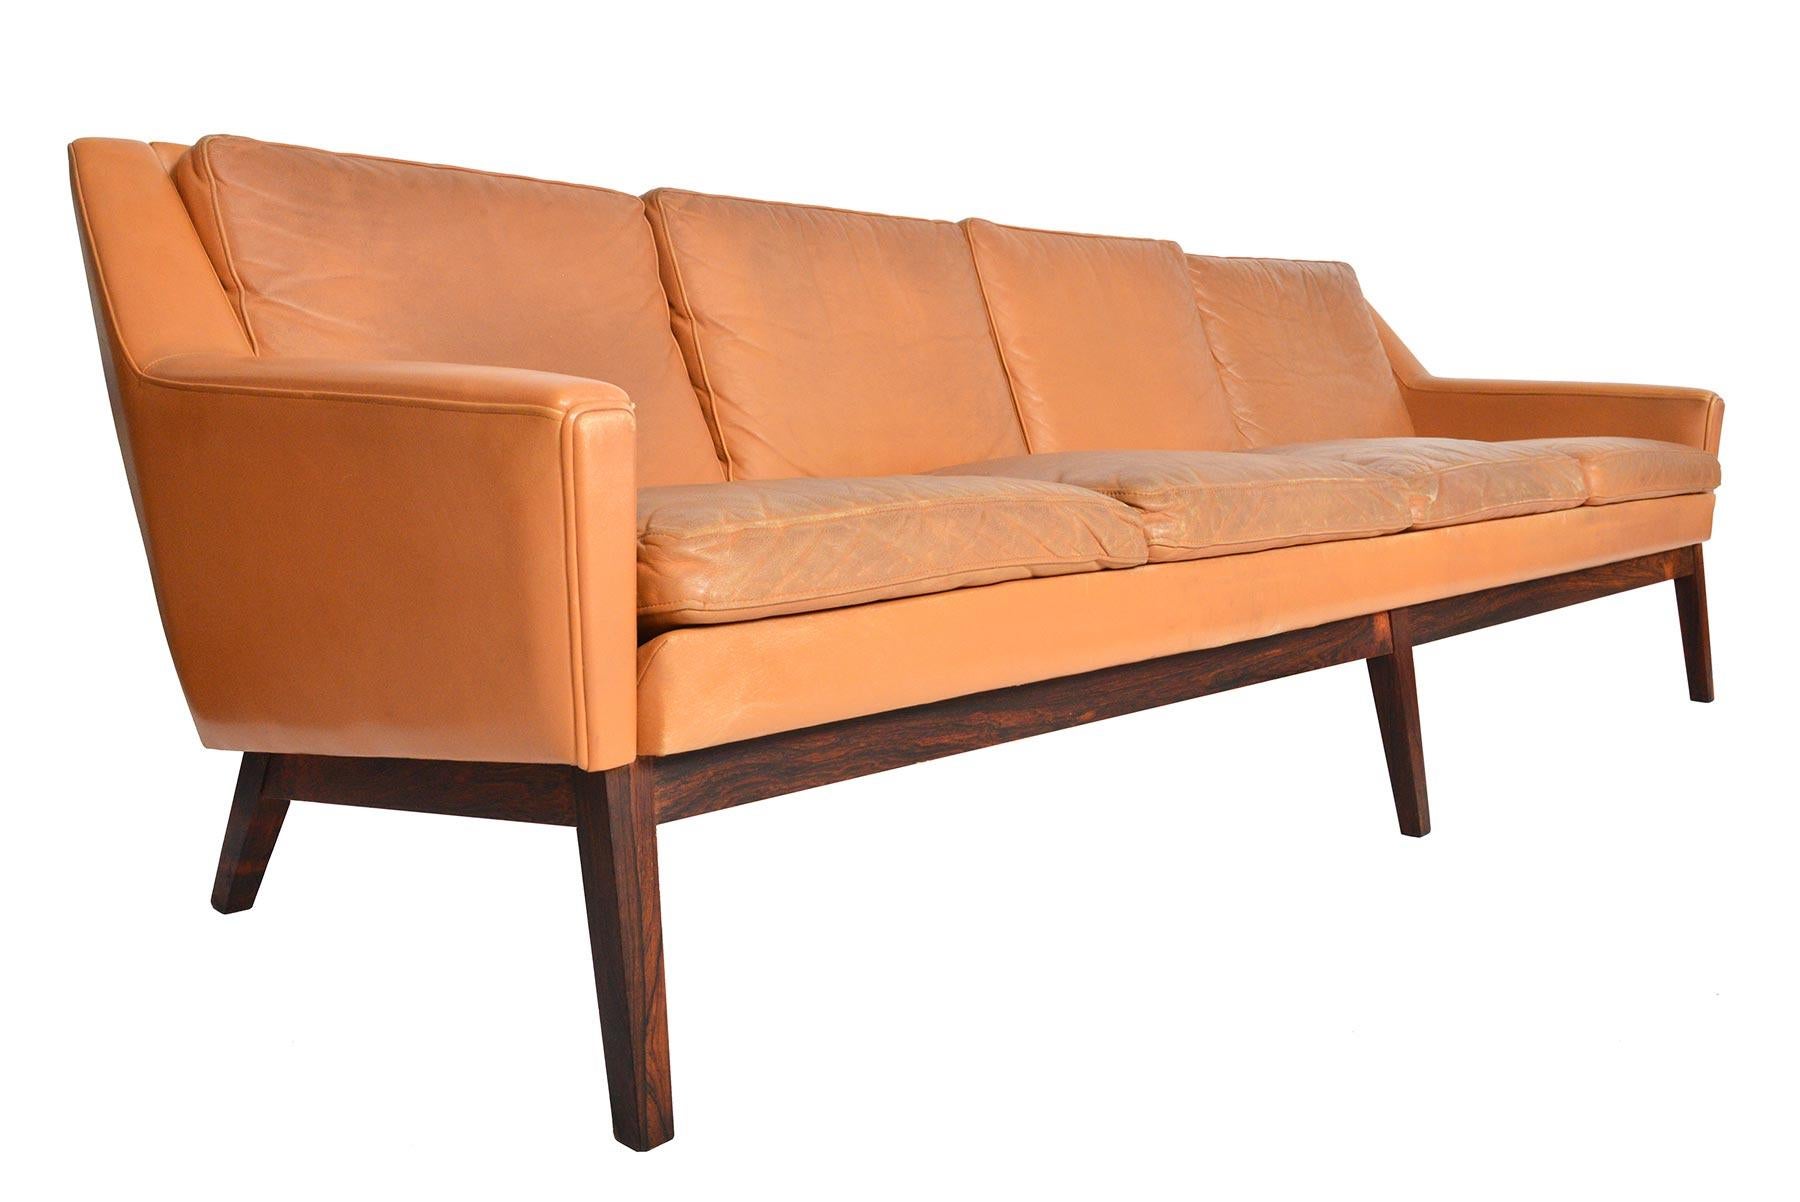 Scandinavian Modern Danish Modern Four-Seat Sepia Leather Sofa